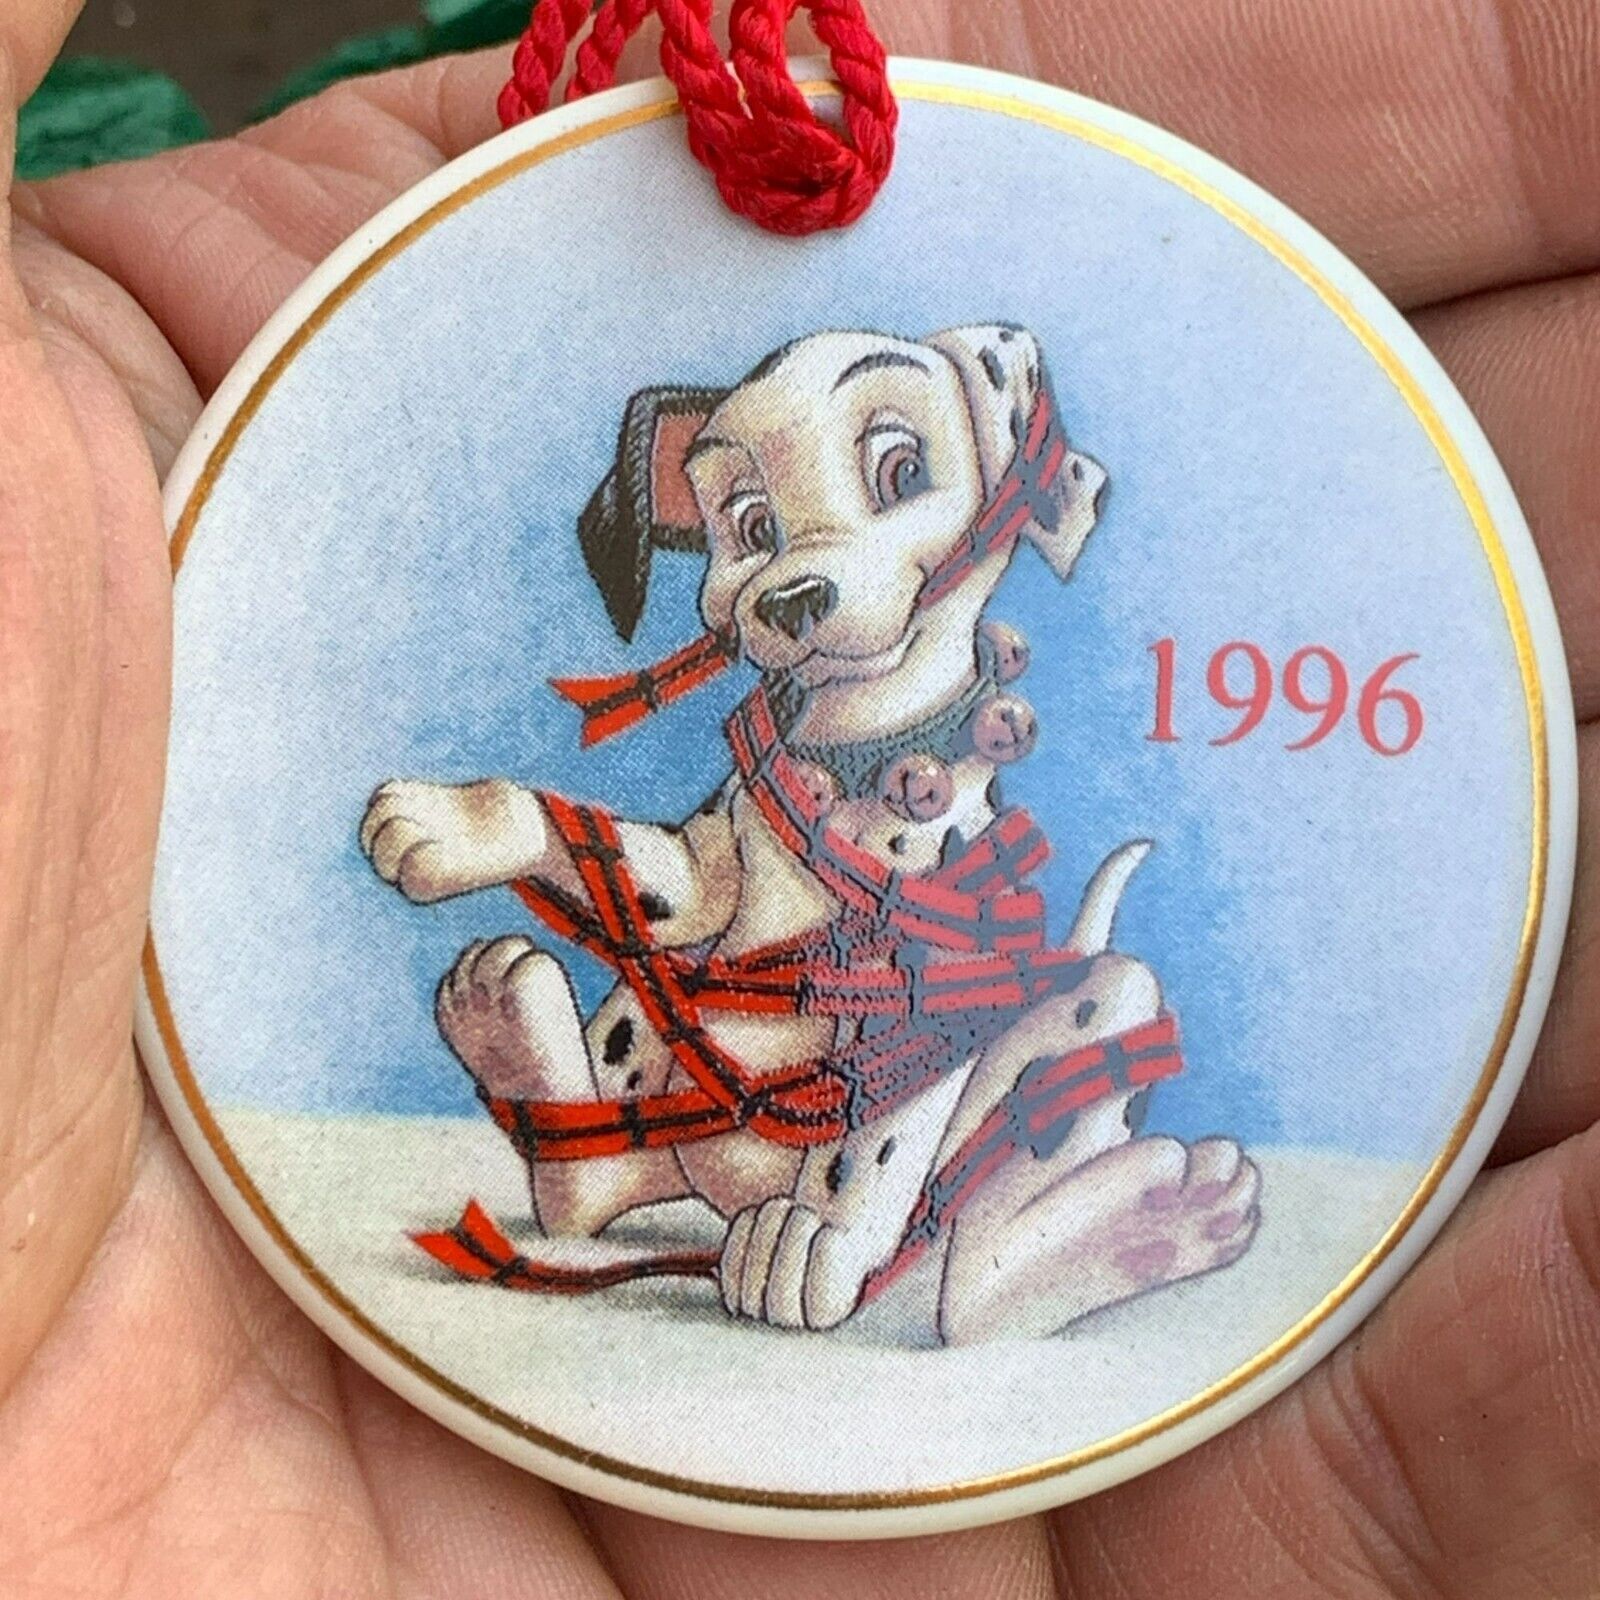 Disney 101 Dalmatians Christmas Ornament From 1996 - $11.88